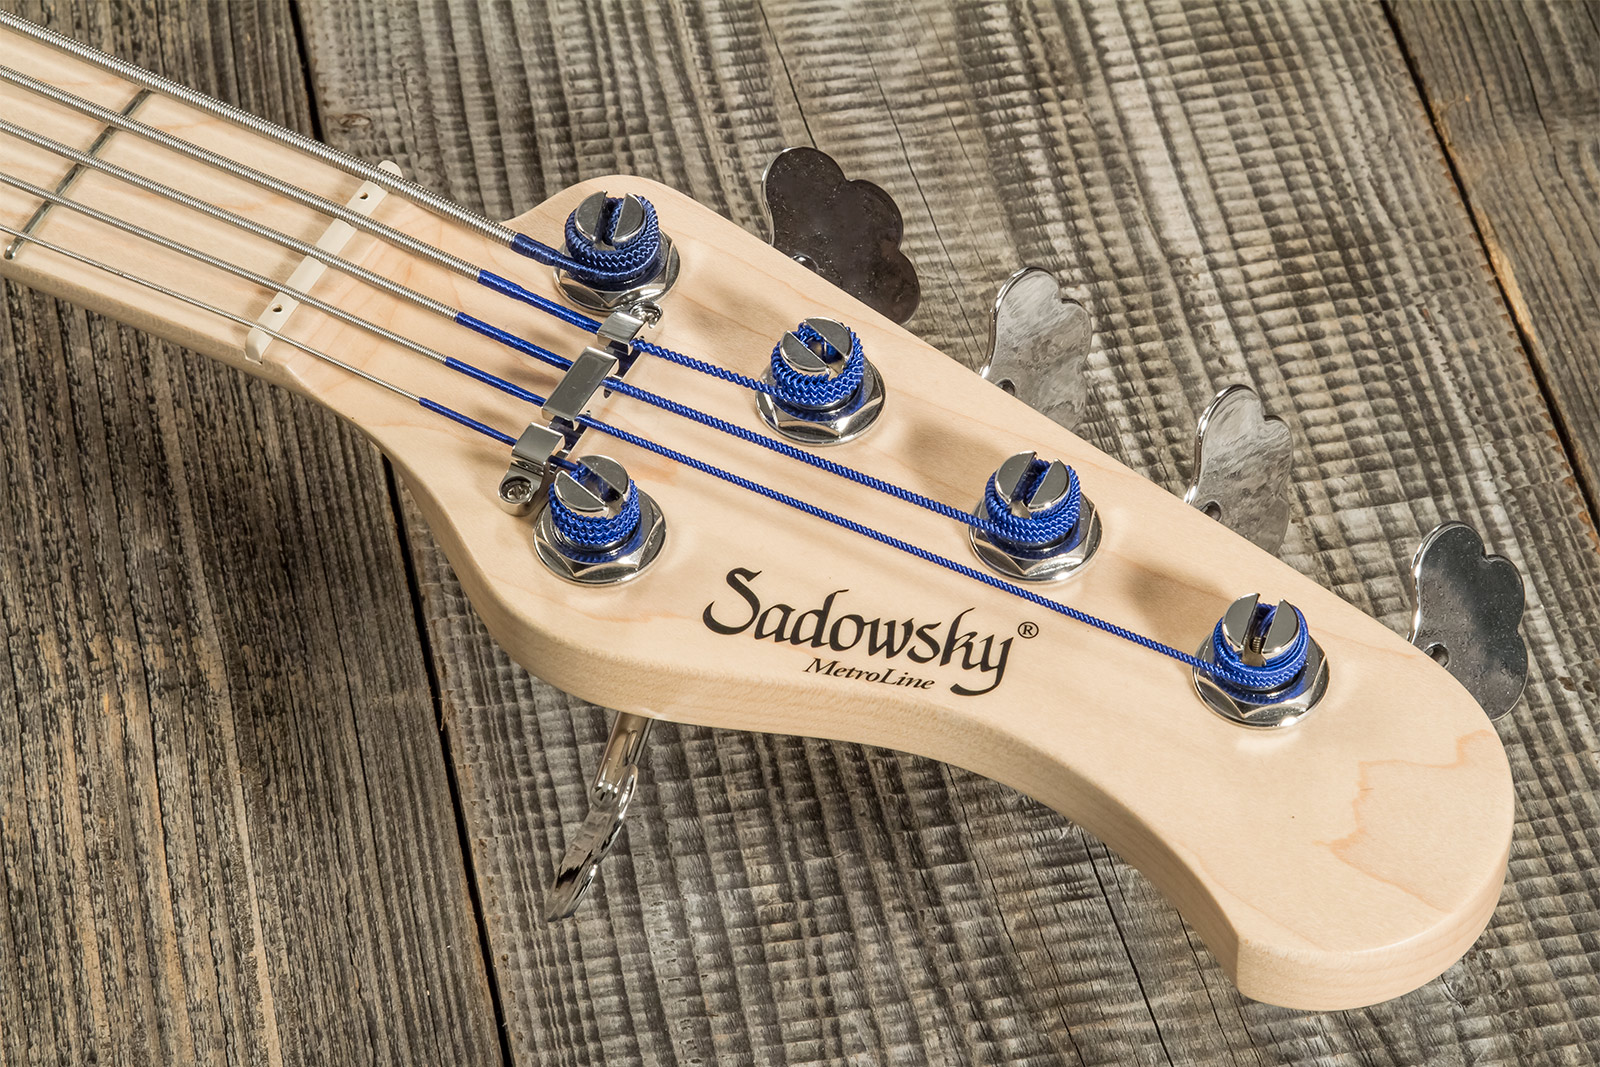 Sadowsky Single Cut Bass 24f Ash 5c Metroline All Active Mn - Satin Black Pearl - Basse Électrique Solid Body - Variation 7